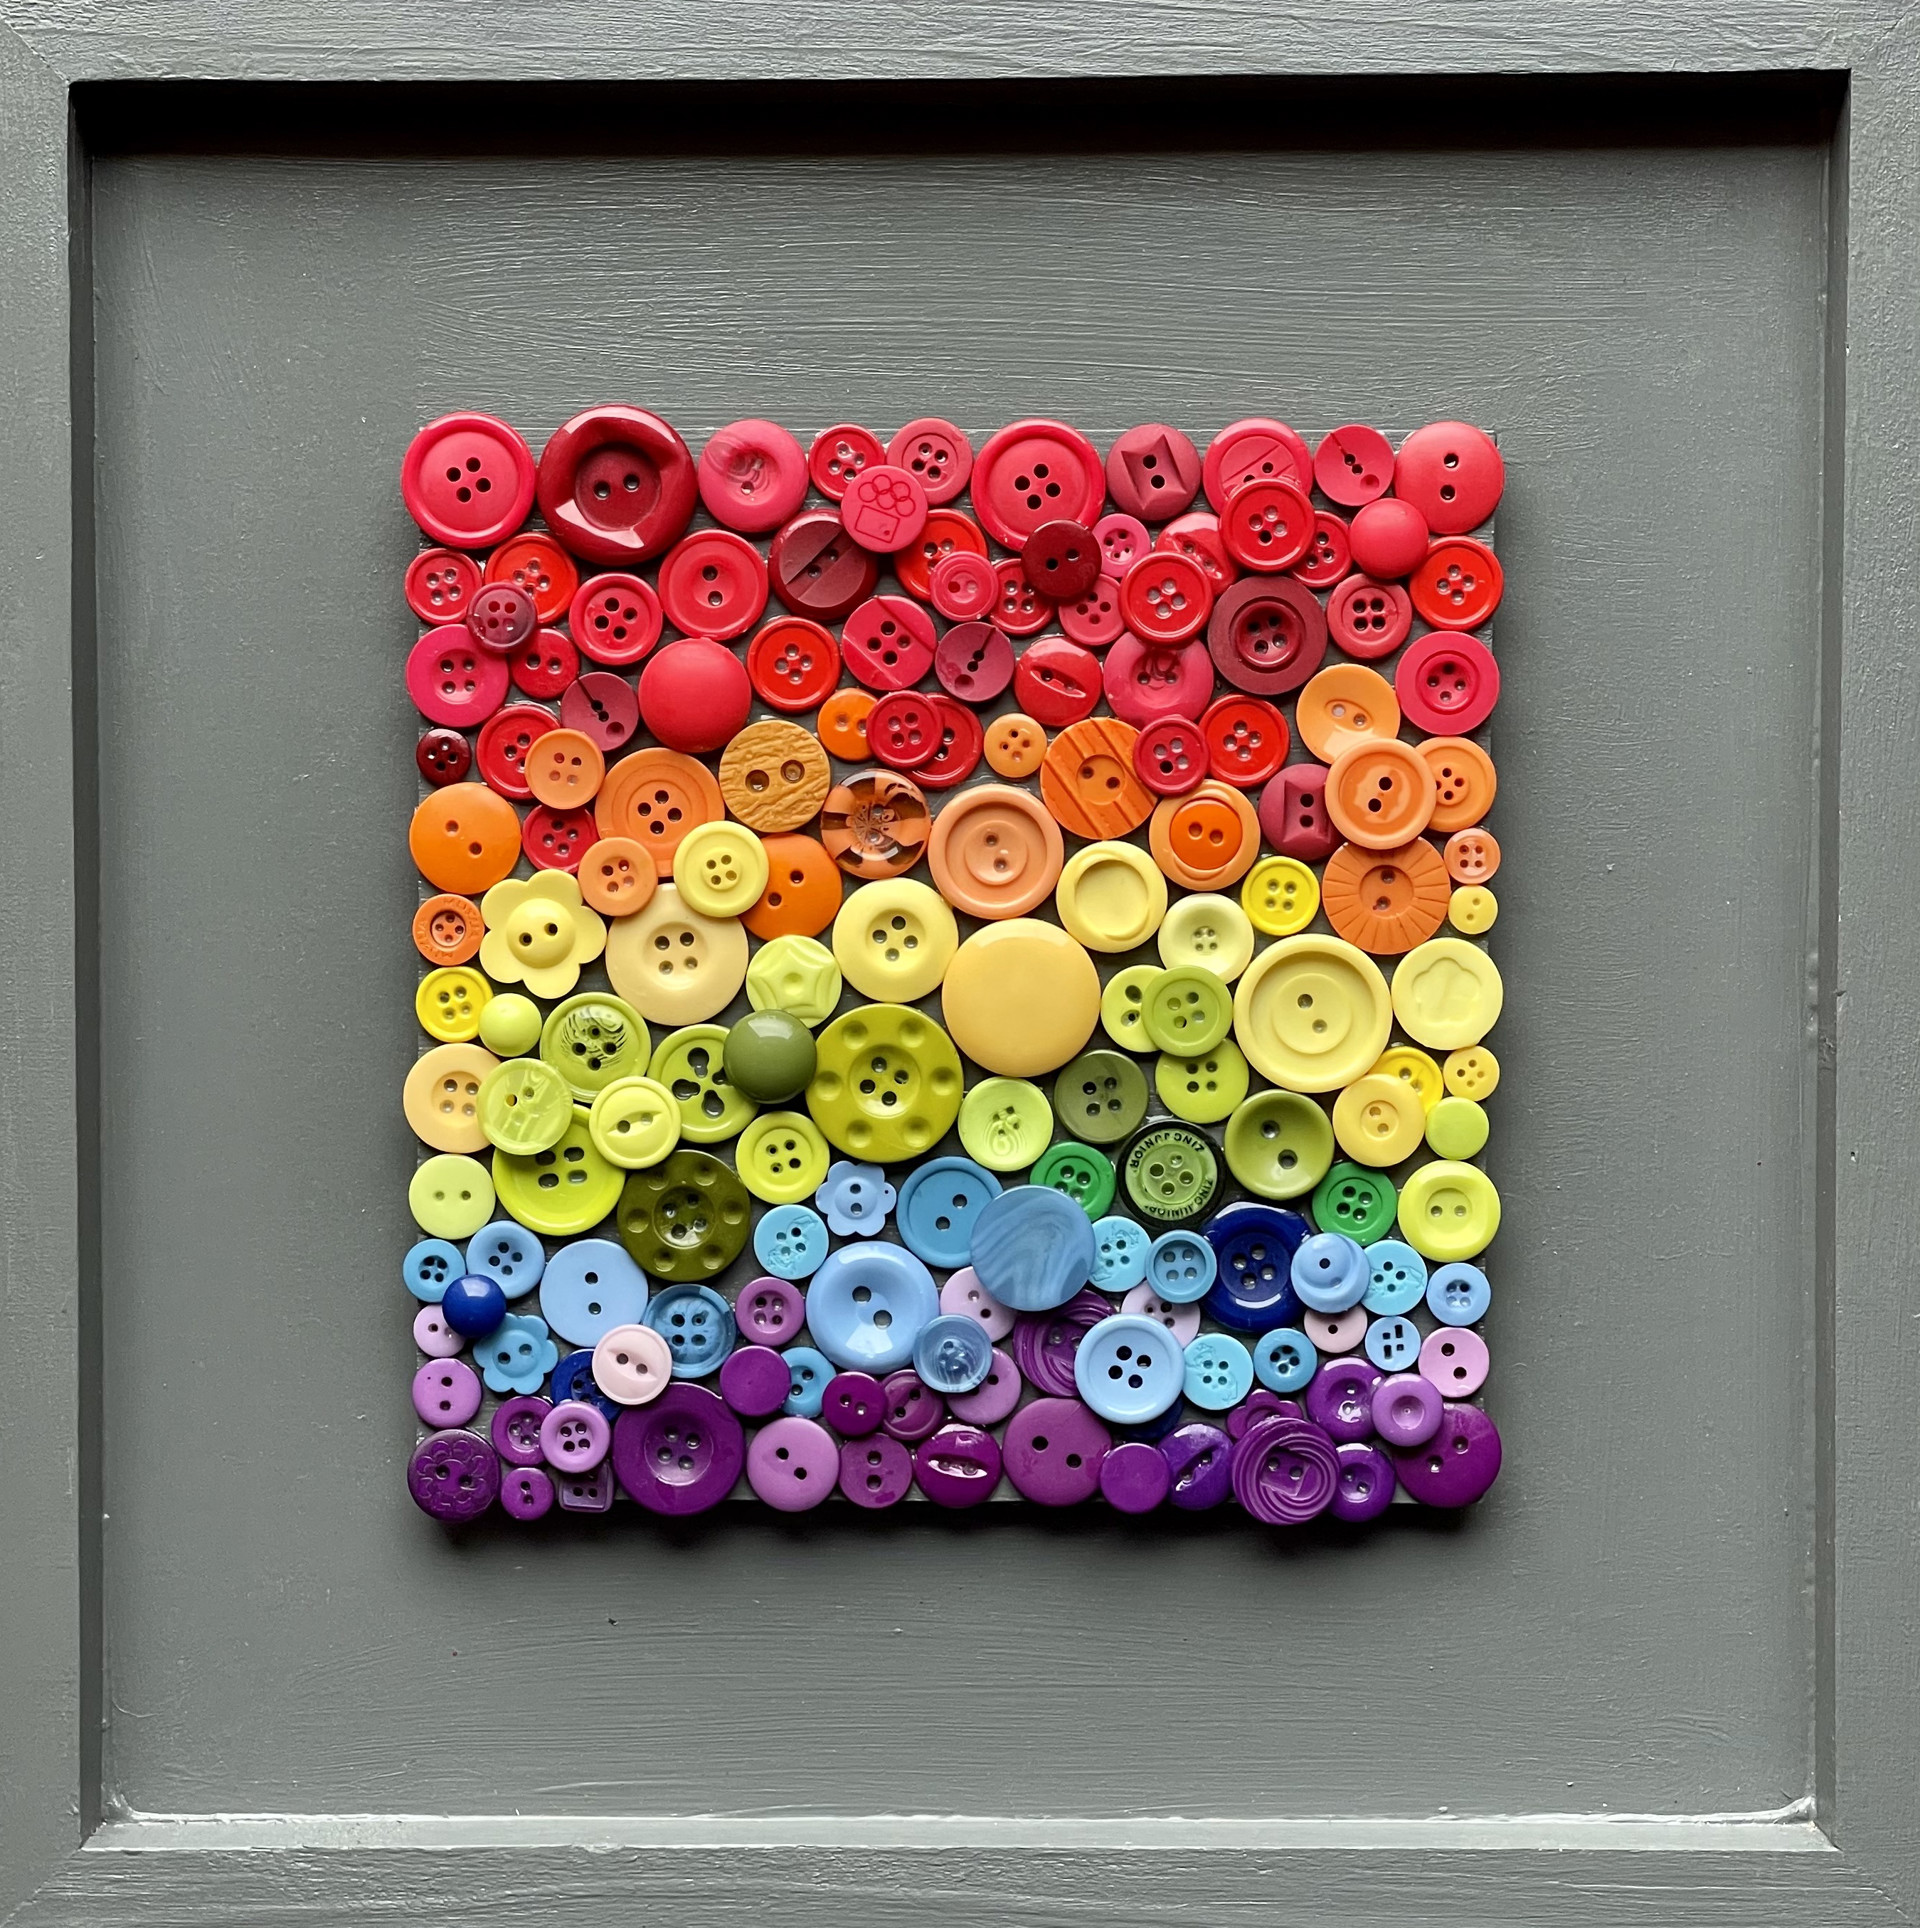 Rainbow Mosaic, by Veena Raj by Visiting Artists